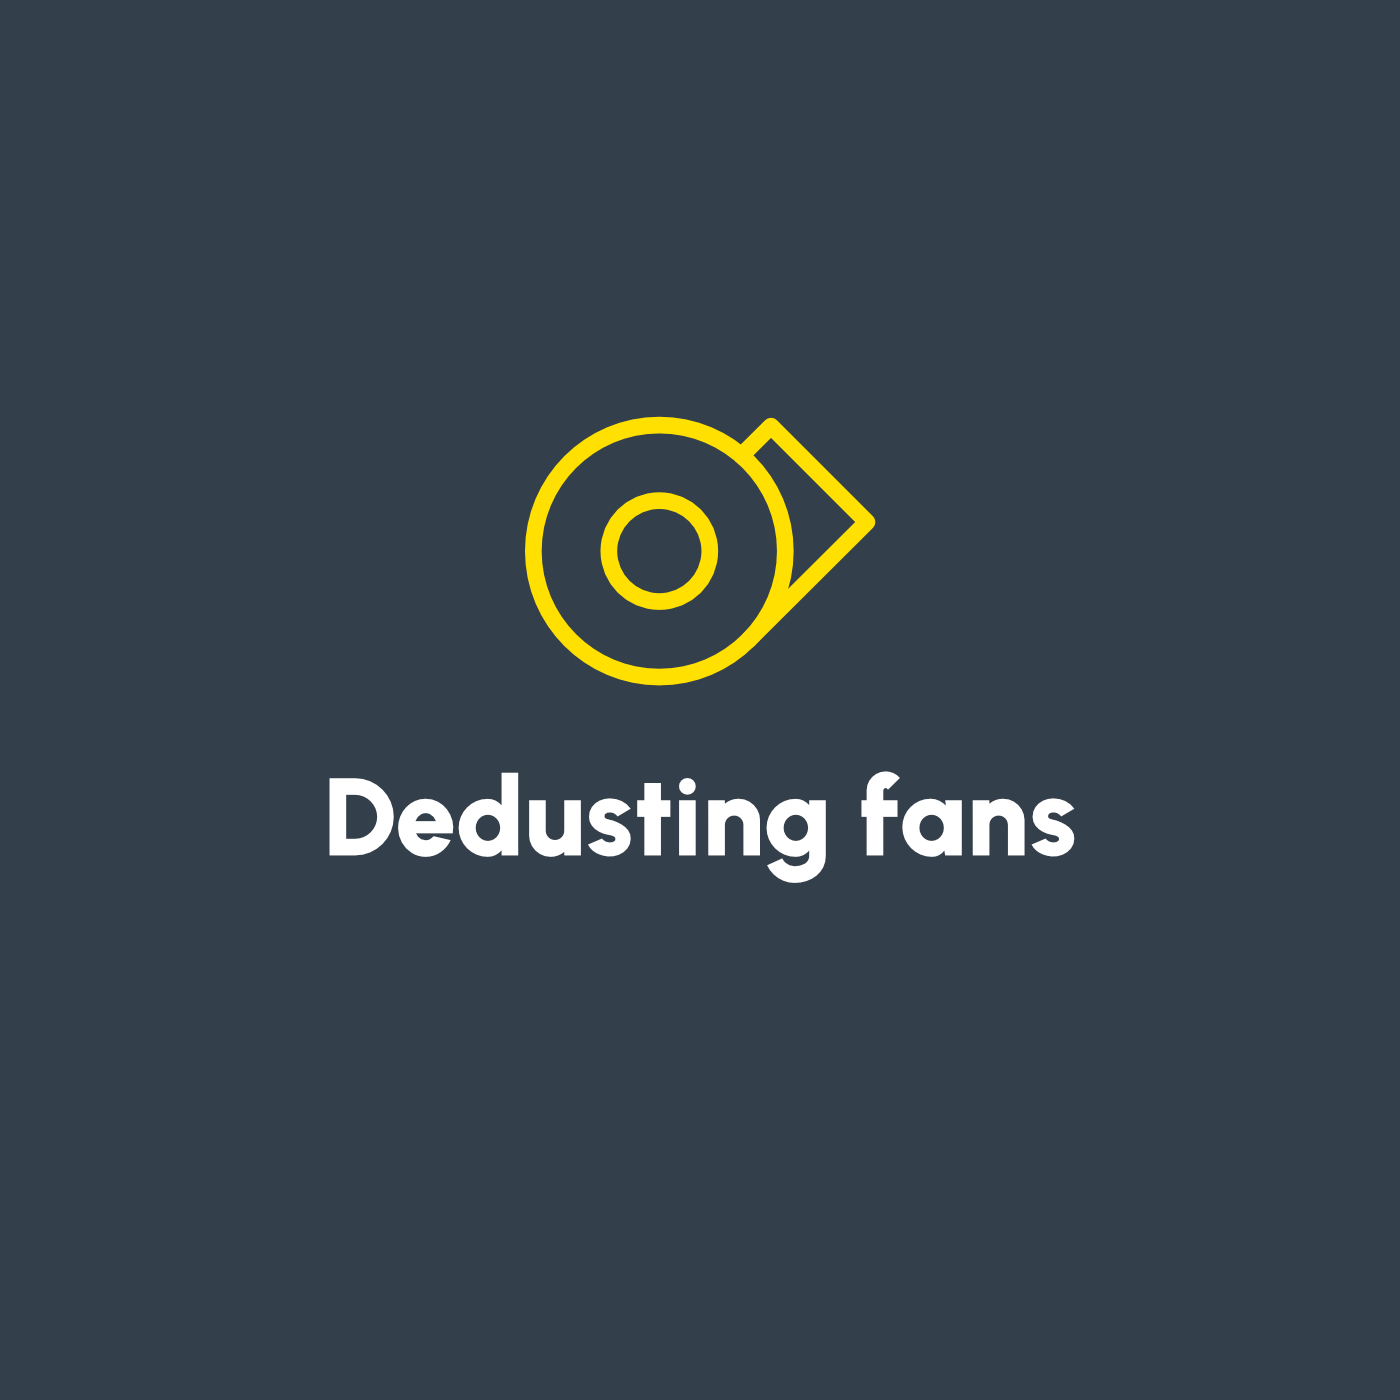 Dedusting fans